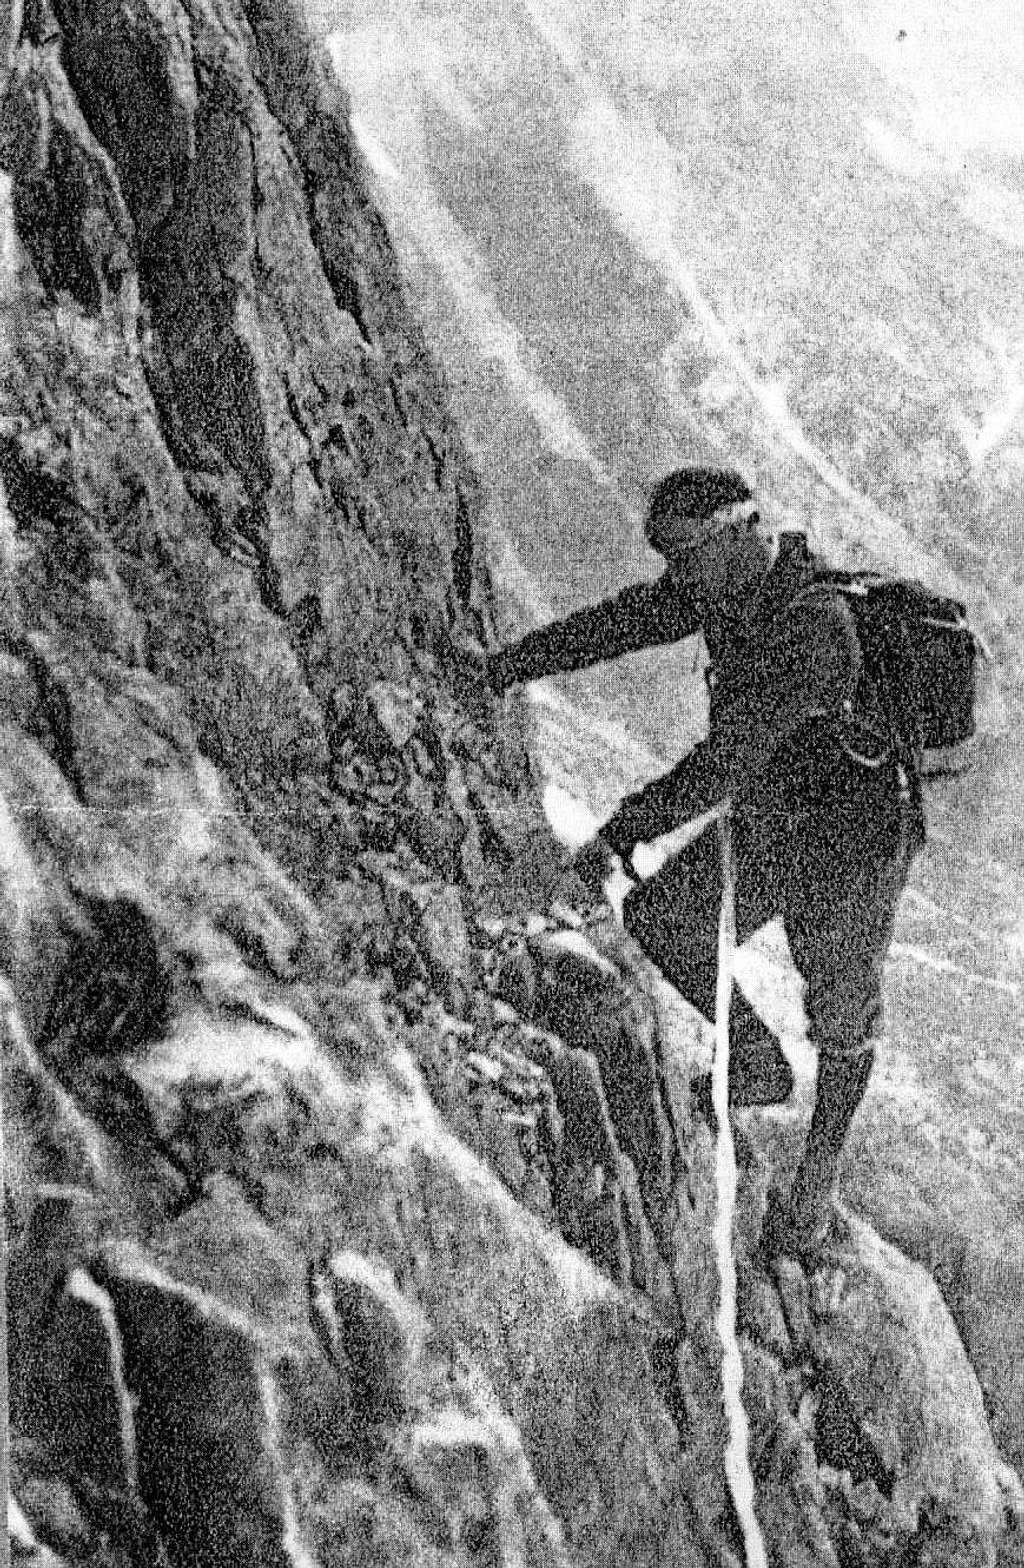 Fritz Eske on Mt. Briaset 1960